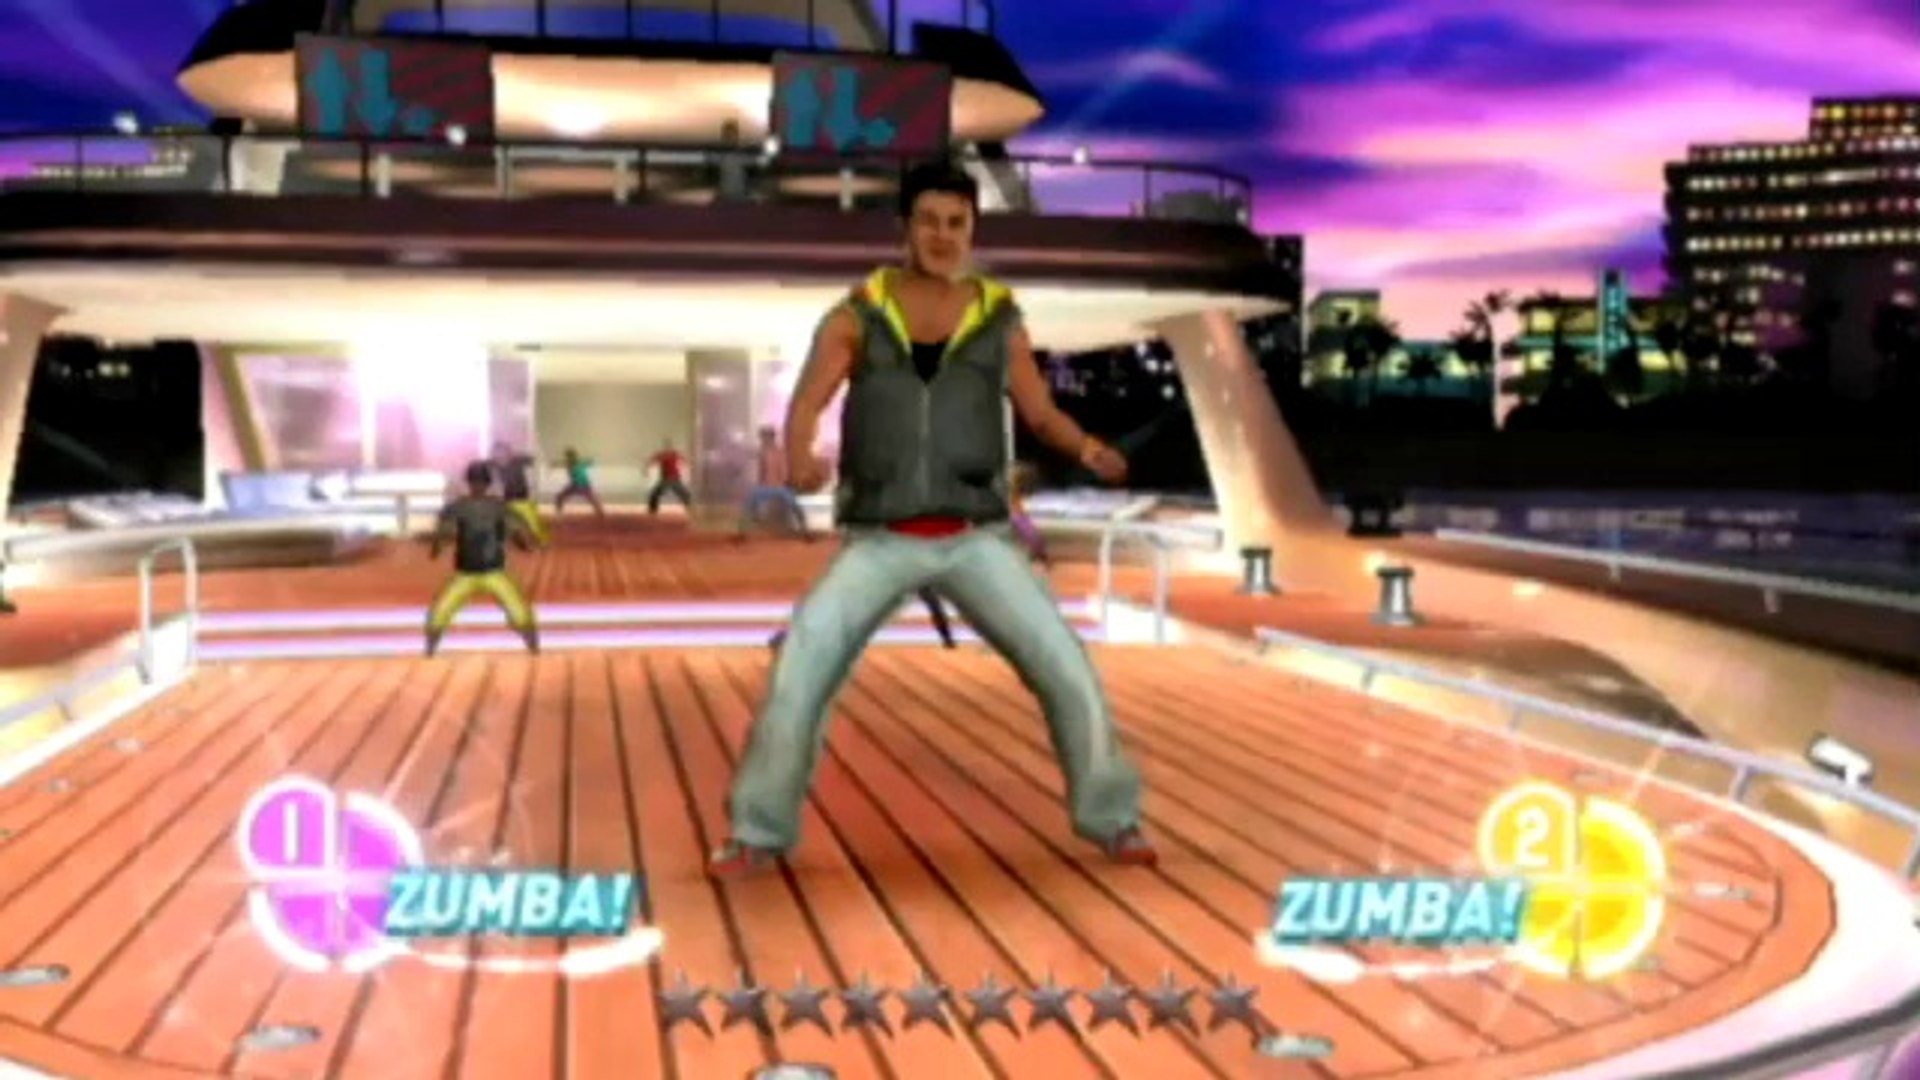 Zumba Fitness 2 - Motion Capture trailer - Vidéo Dailymotion